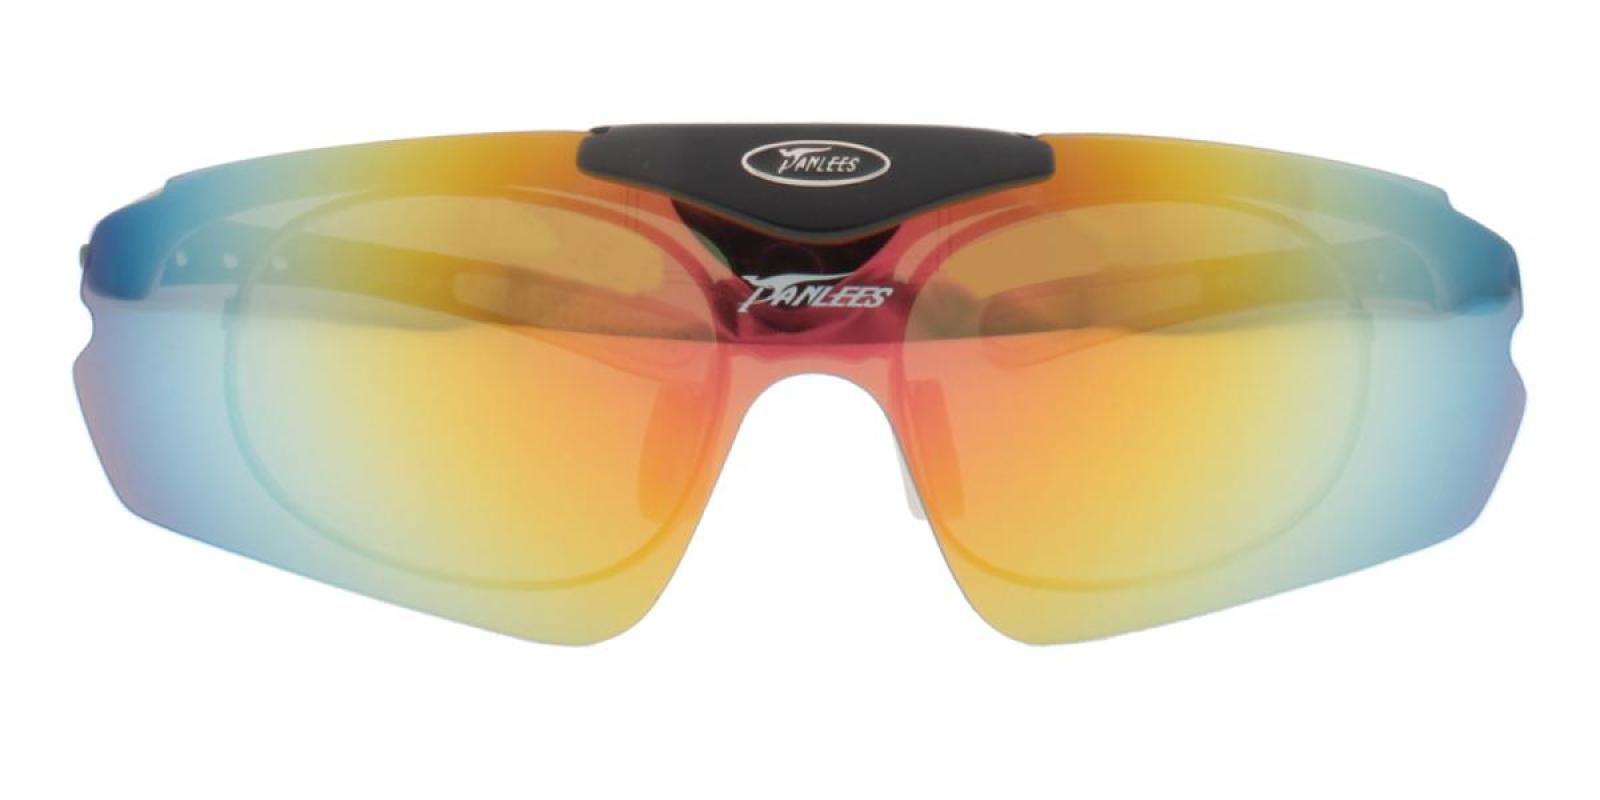 Vigor-White-Geometric-Plastic-SportsGlasses-detail